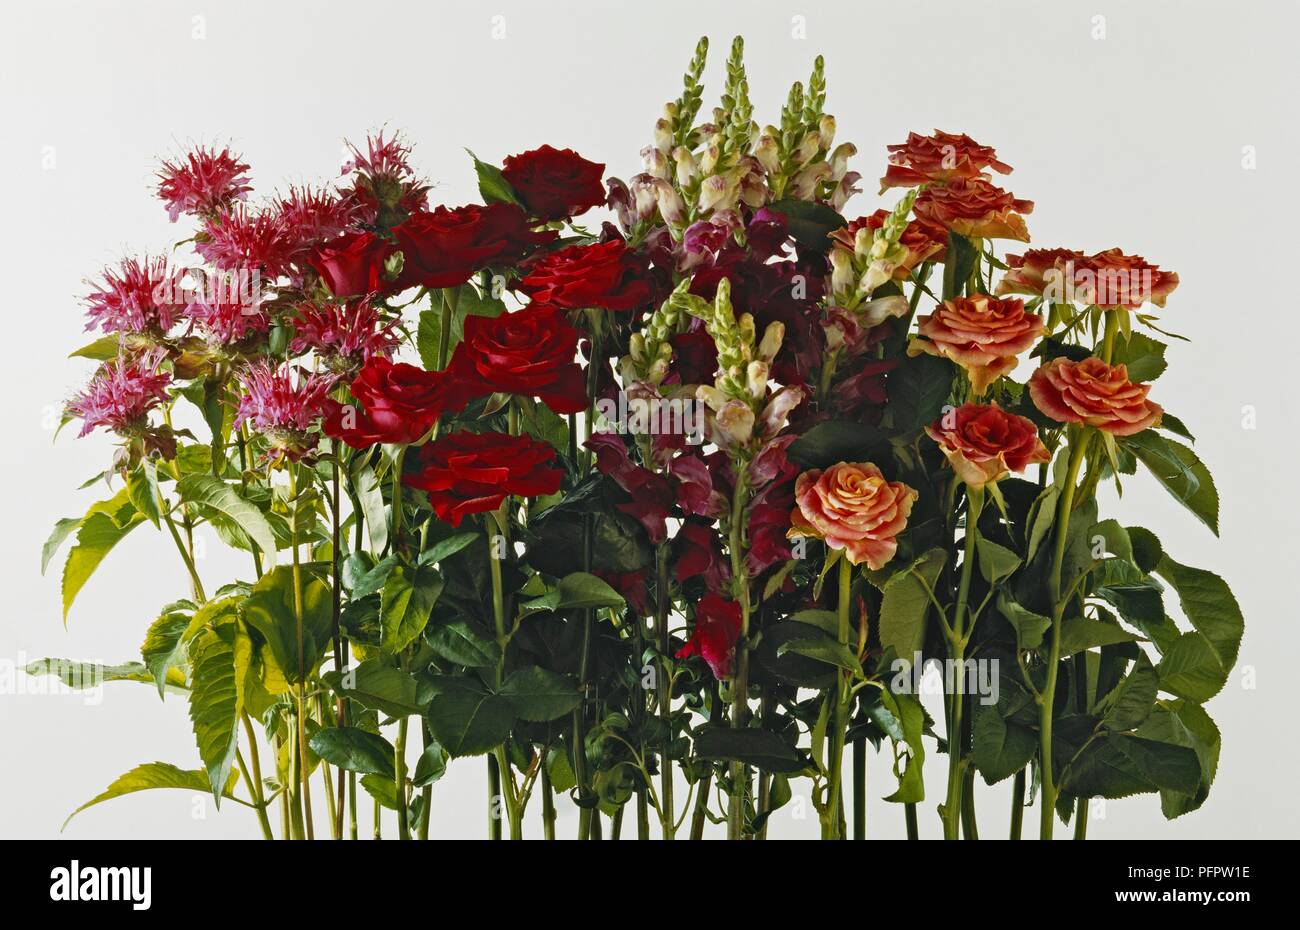 Flowers from Mondarda didyma 'Cambridge Scarlet' (Bergamot), Rosa 'National Trust' (Hybrid tea), Antirrhinum majus 'Princess Series' (Snapdragon), Rosa 'Norwich Castle' (Floridunda rose) Stock Photo